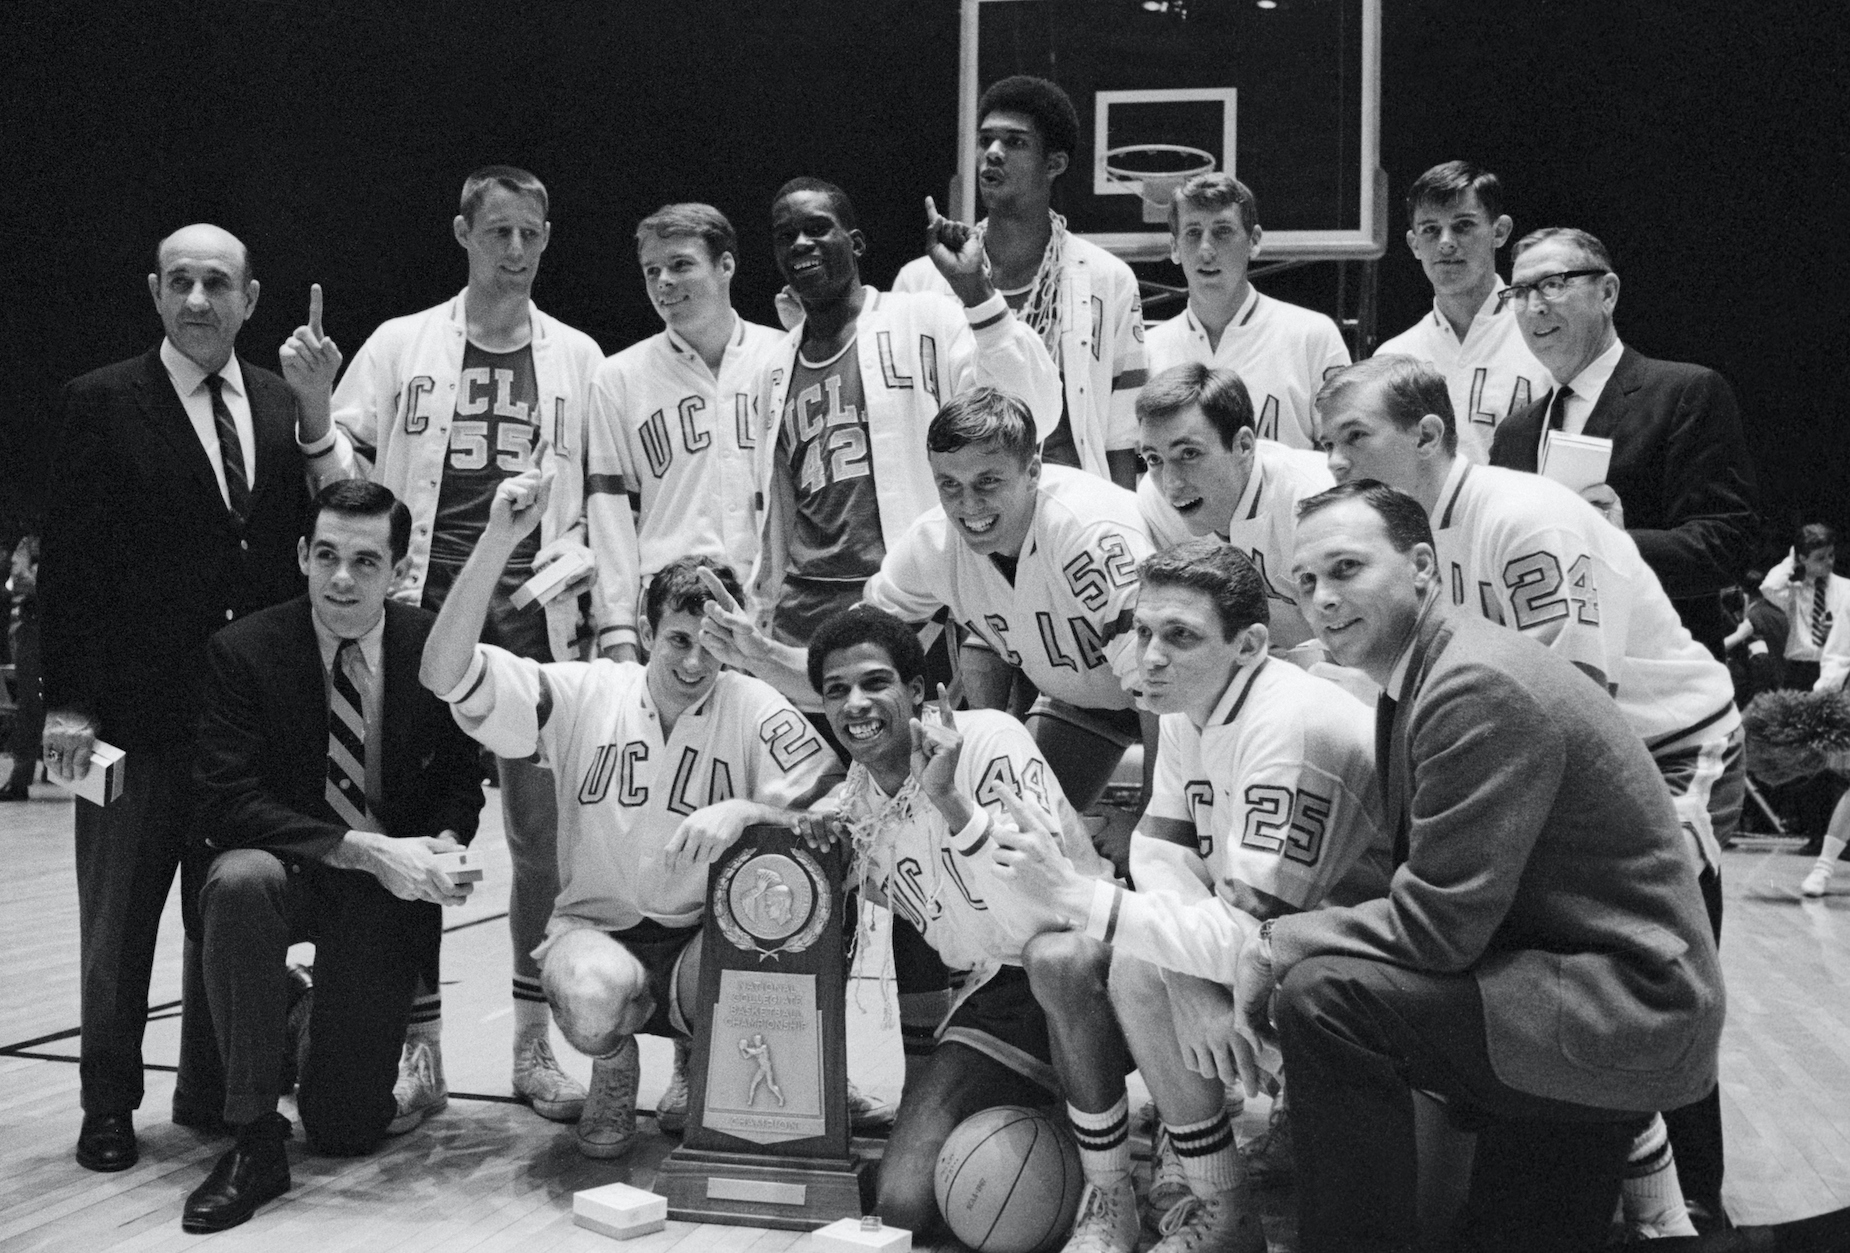 The UCLA Bruins men's basketball team celebrates winning the NCAA championship in 1967.